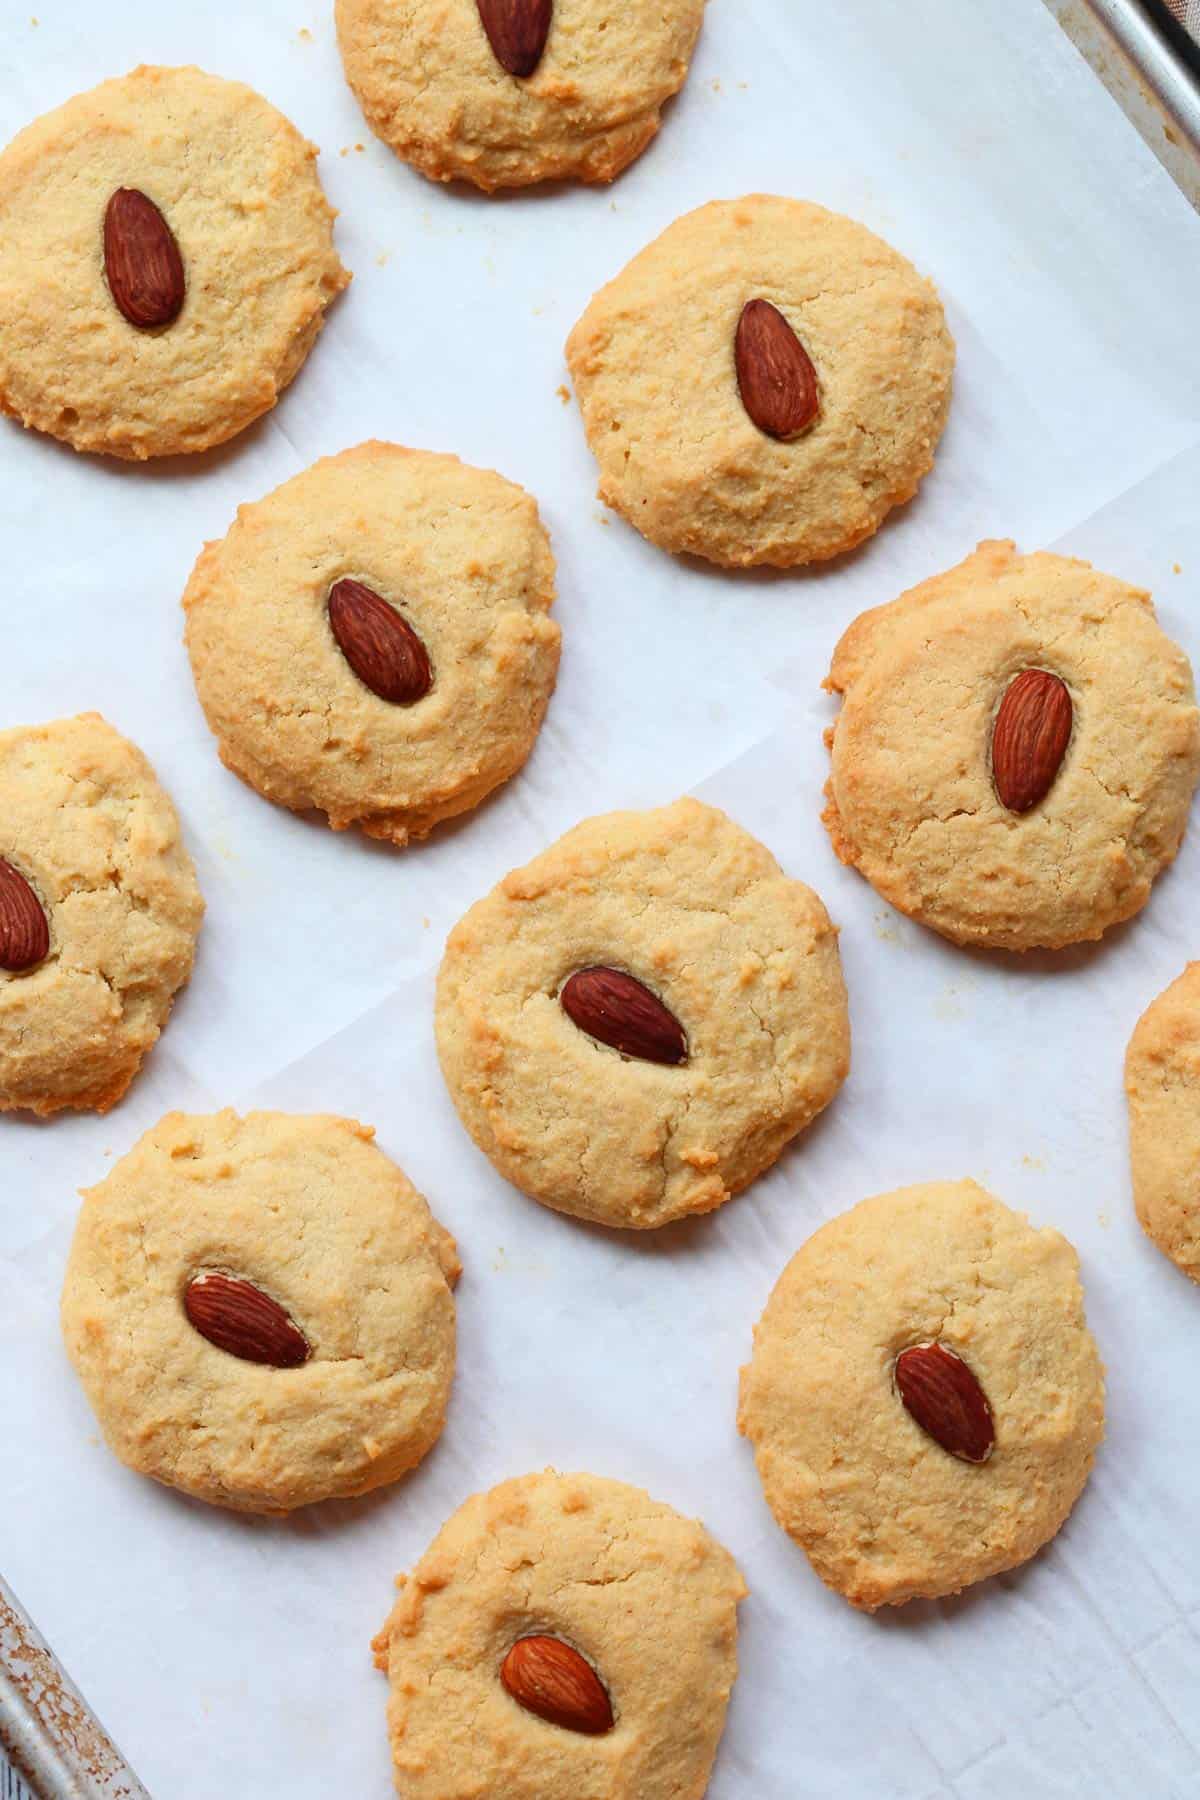 Almond flour cookies on a baking sheet.